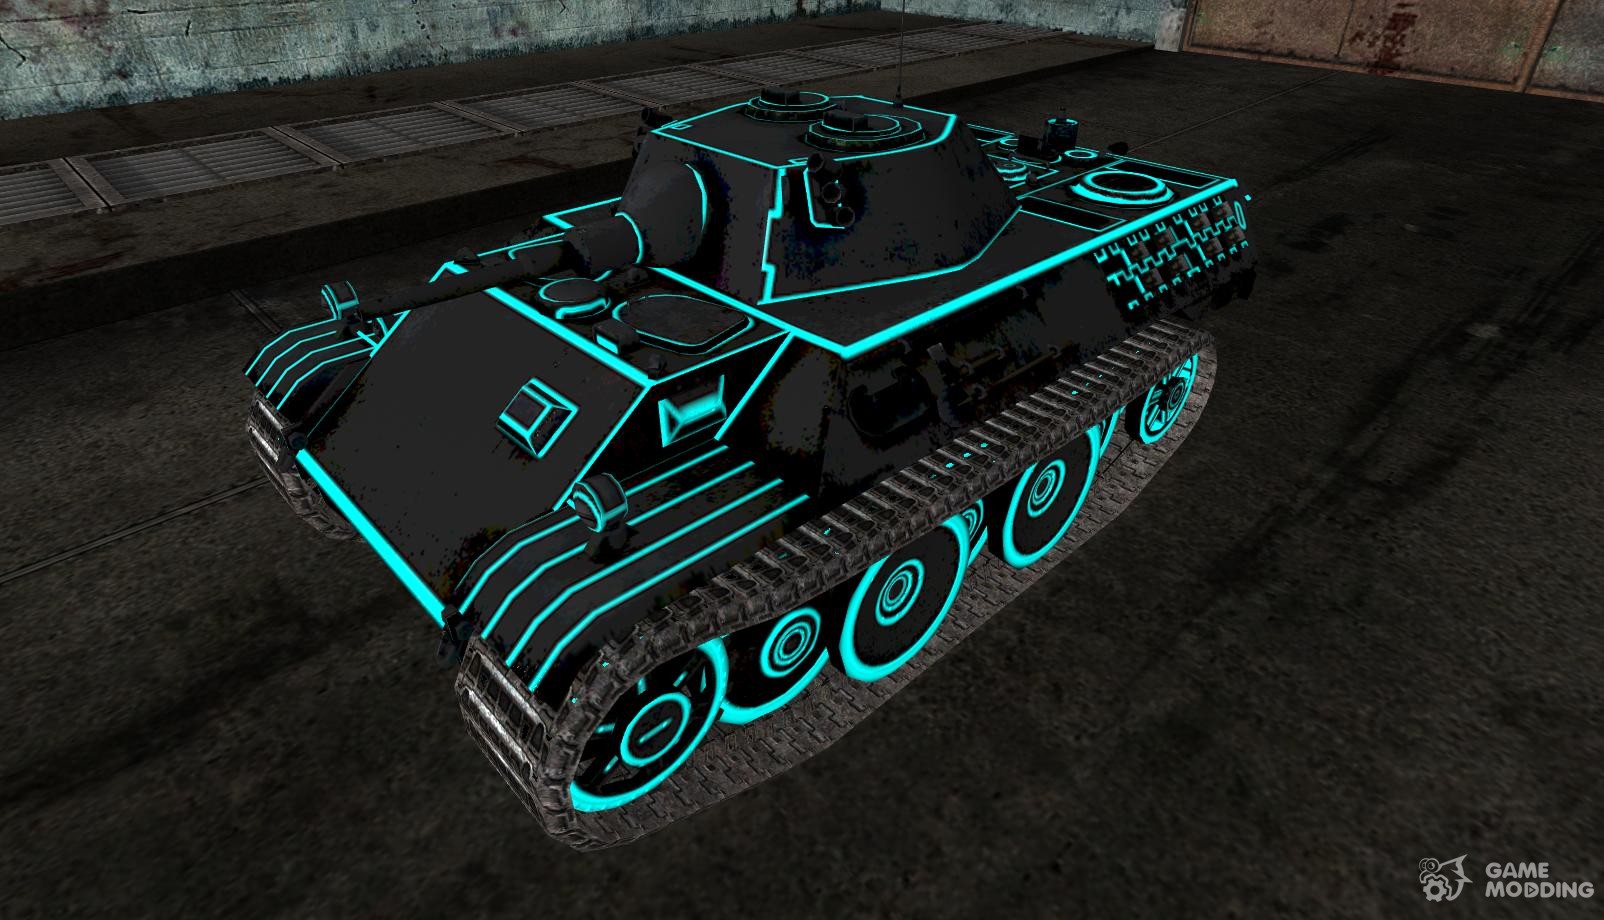 Шкурки wot. Шкурки на танки World of Tanks. Немецкий танк vk1602 леопард. World of Tanks скины для танков. Шкурки танков для World of Tanks.